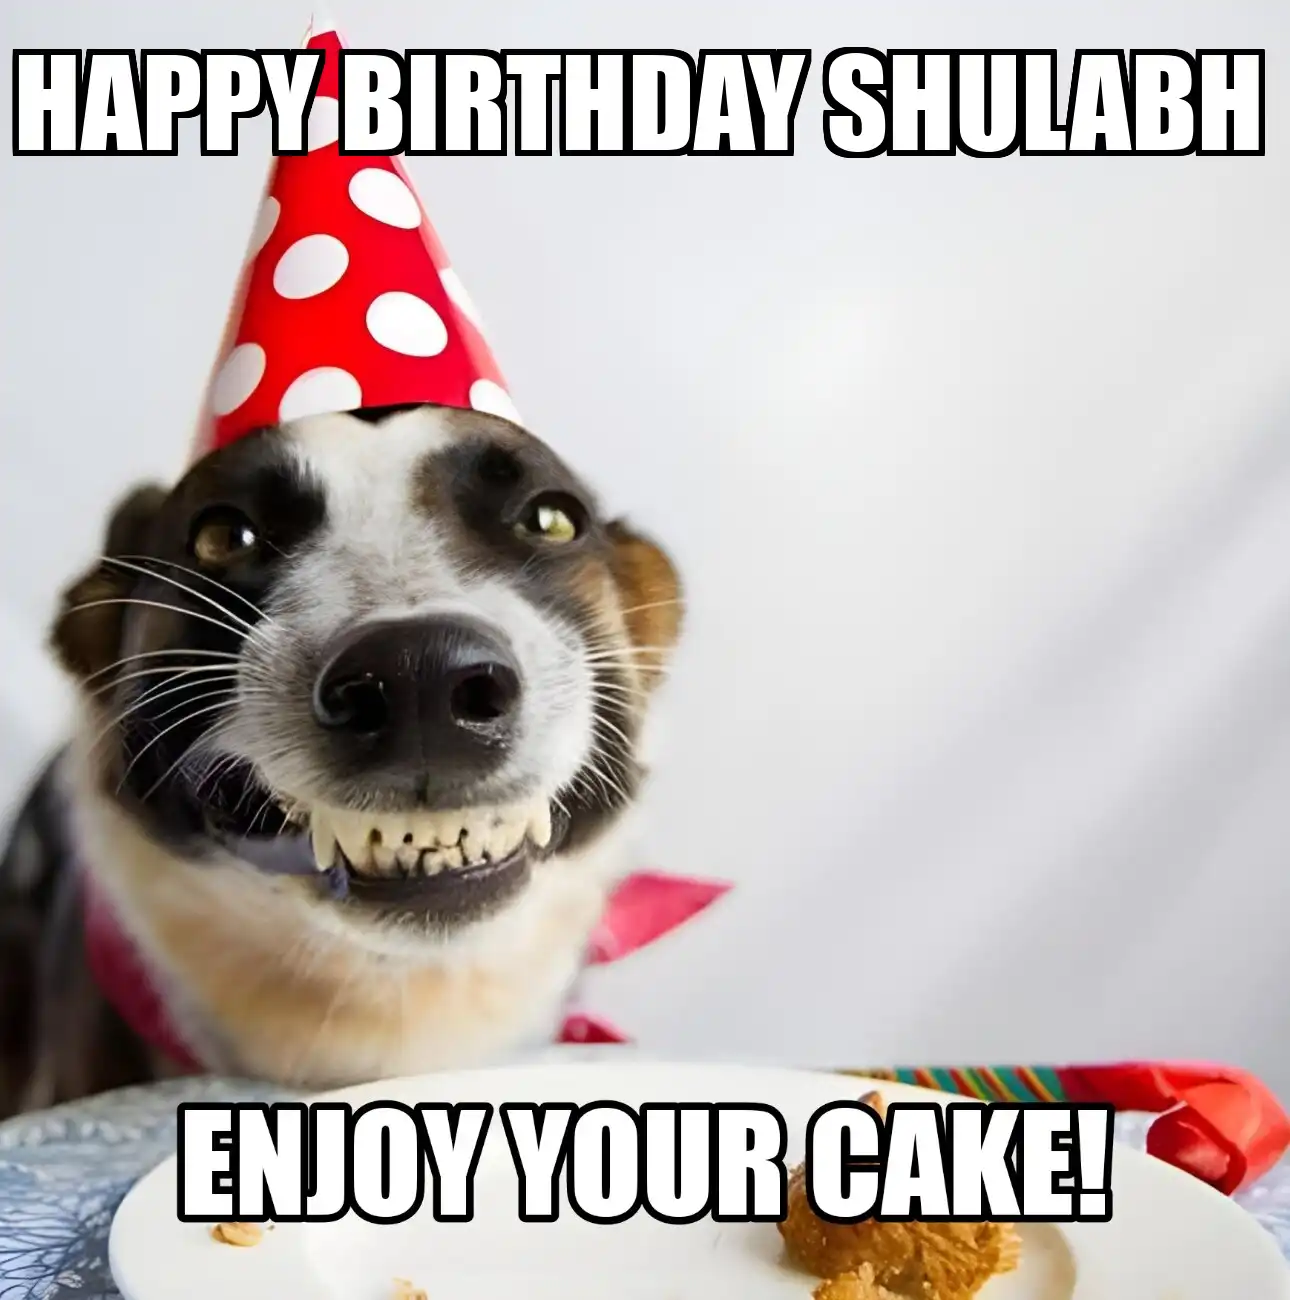 Happy Birthday Shulabh Enjoy Your Cake Dog Meme